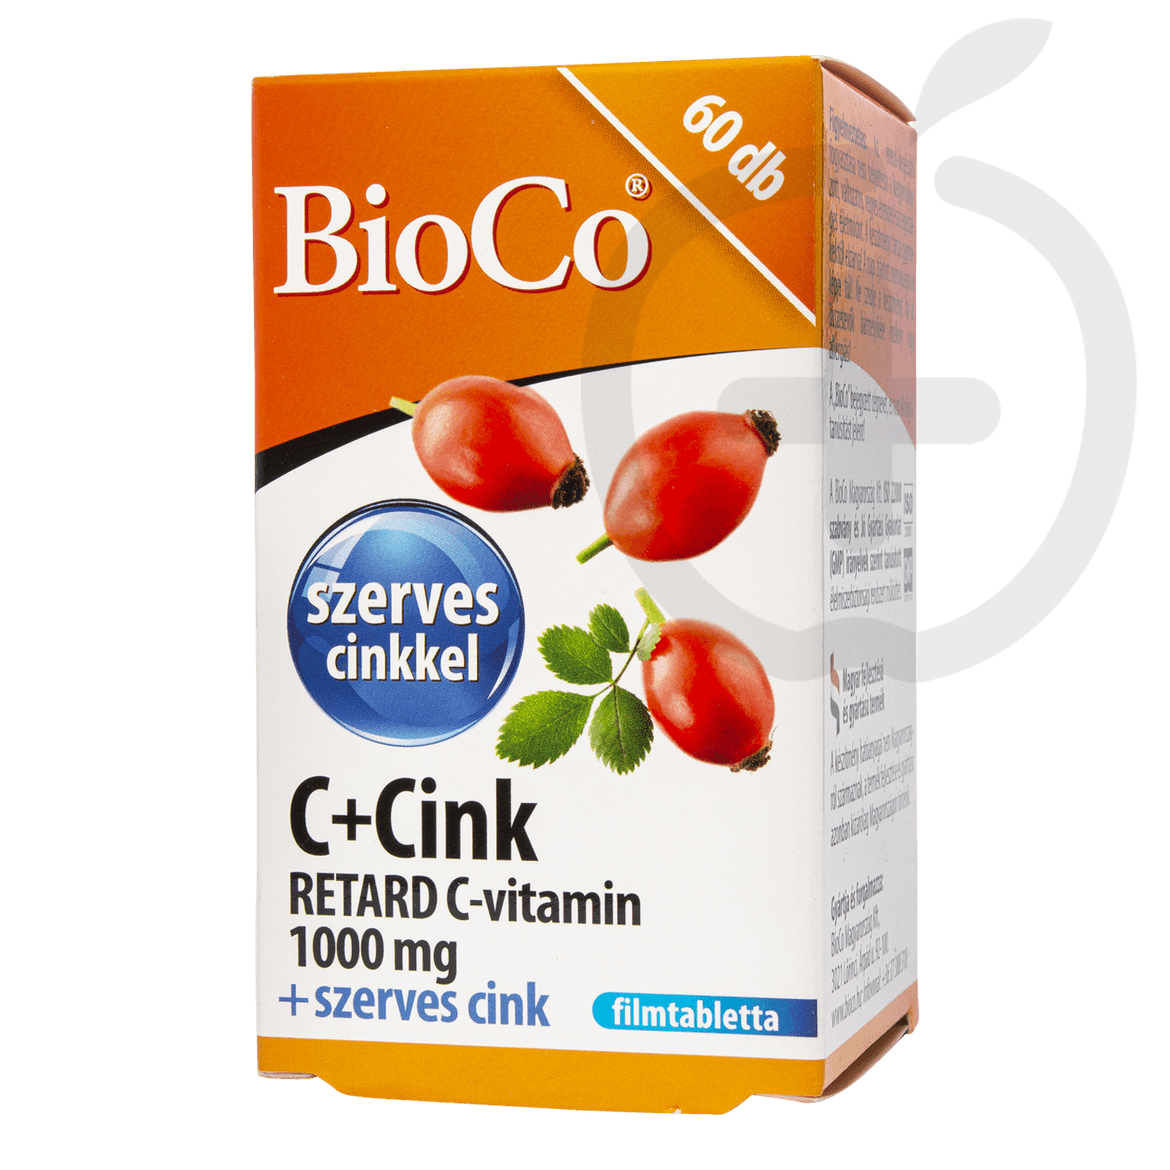 BioCo C+Cink Retard C-vitamin 1000 mg + szerves cink filmtabletta